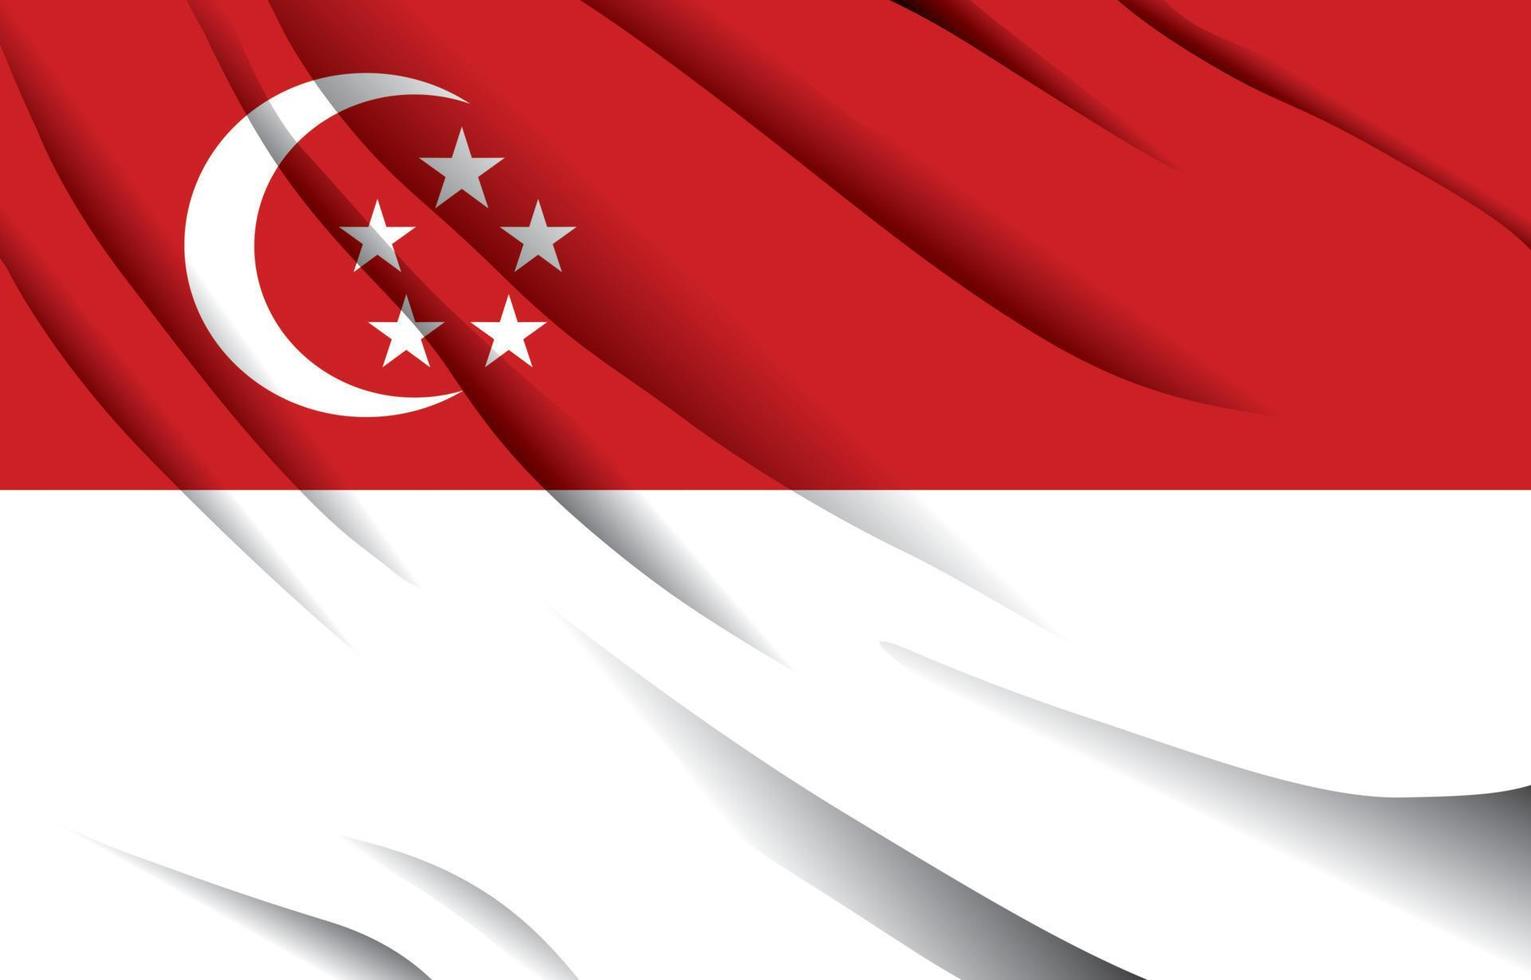 singapore national flag waving realistic vector illustration